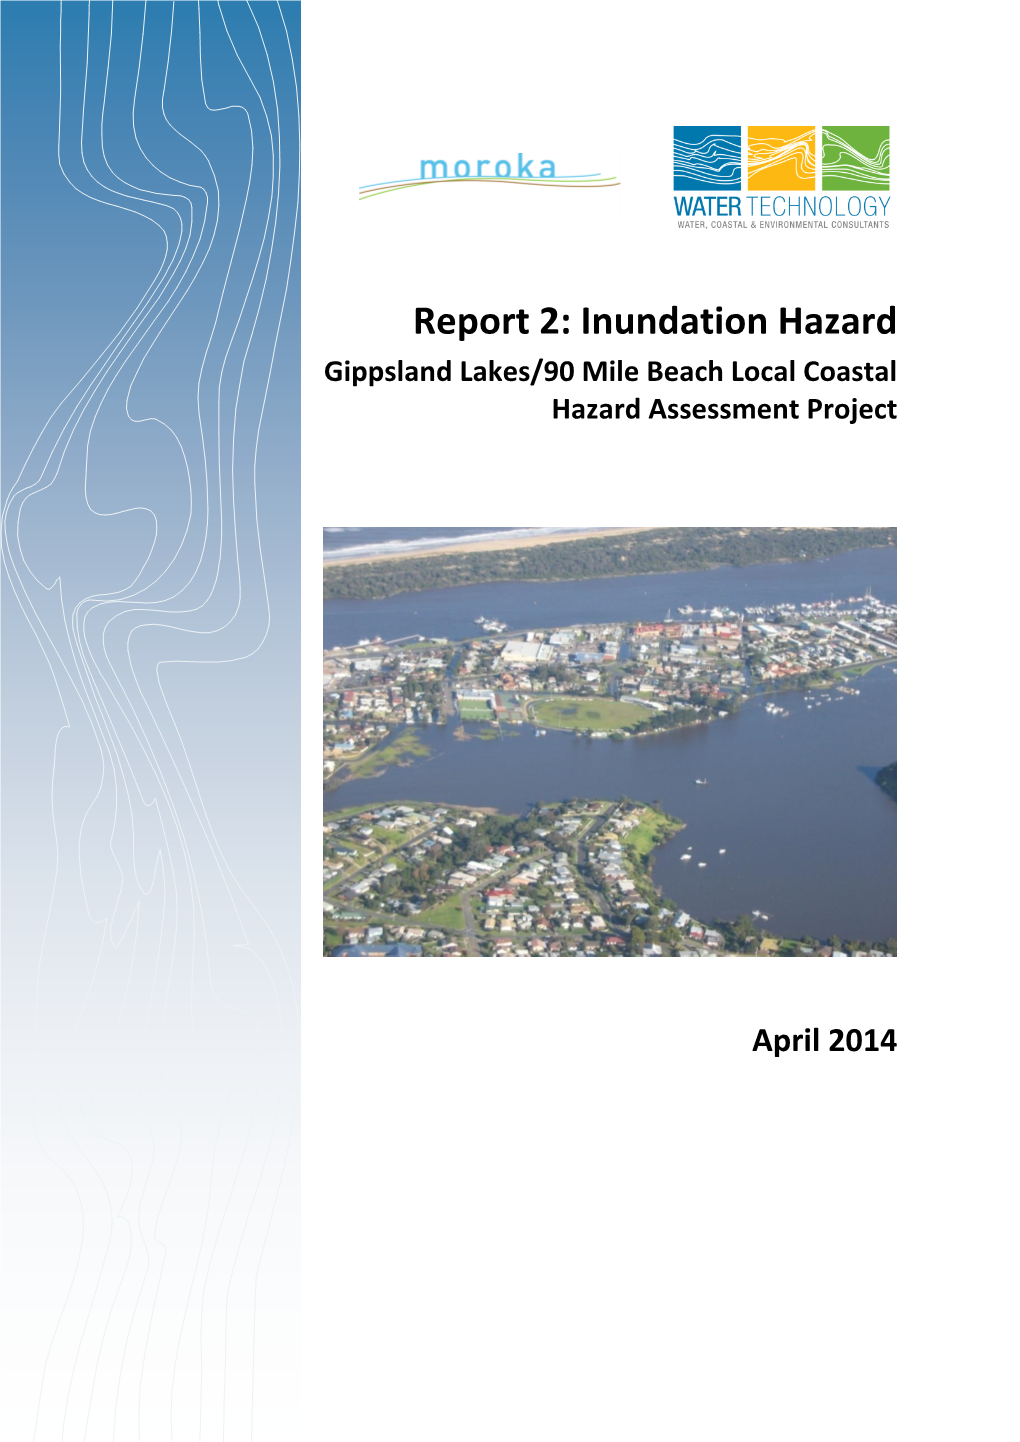 Gippsland Lakes/90 Mile Beach Coastal Hazard Assessment